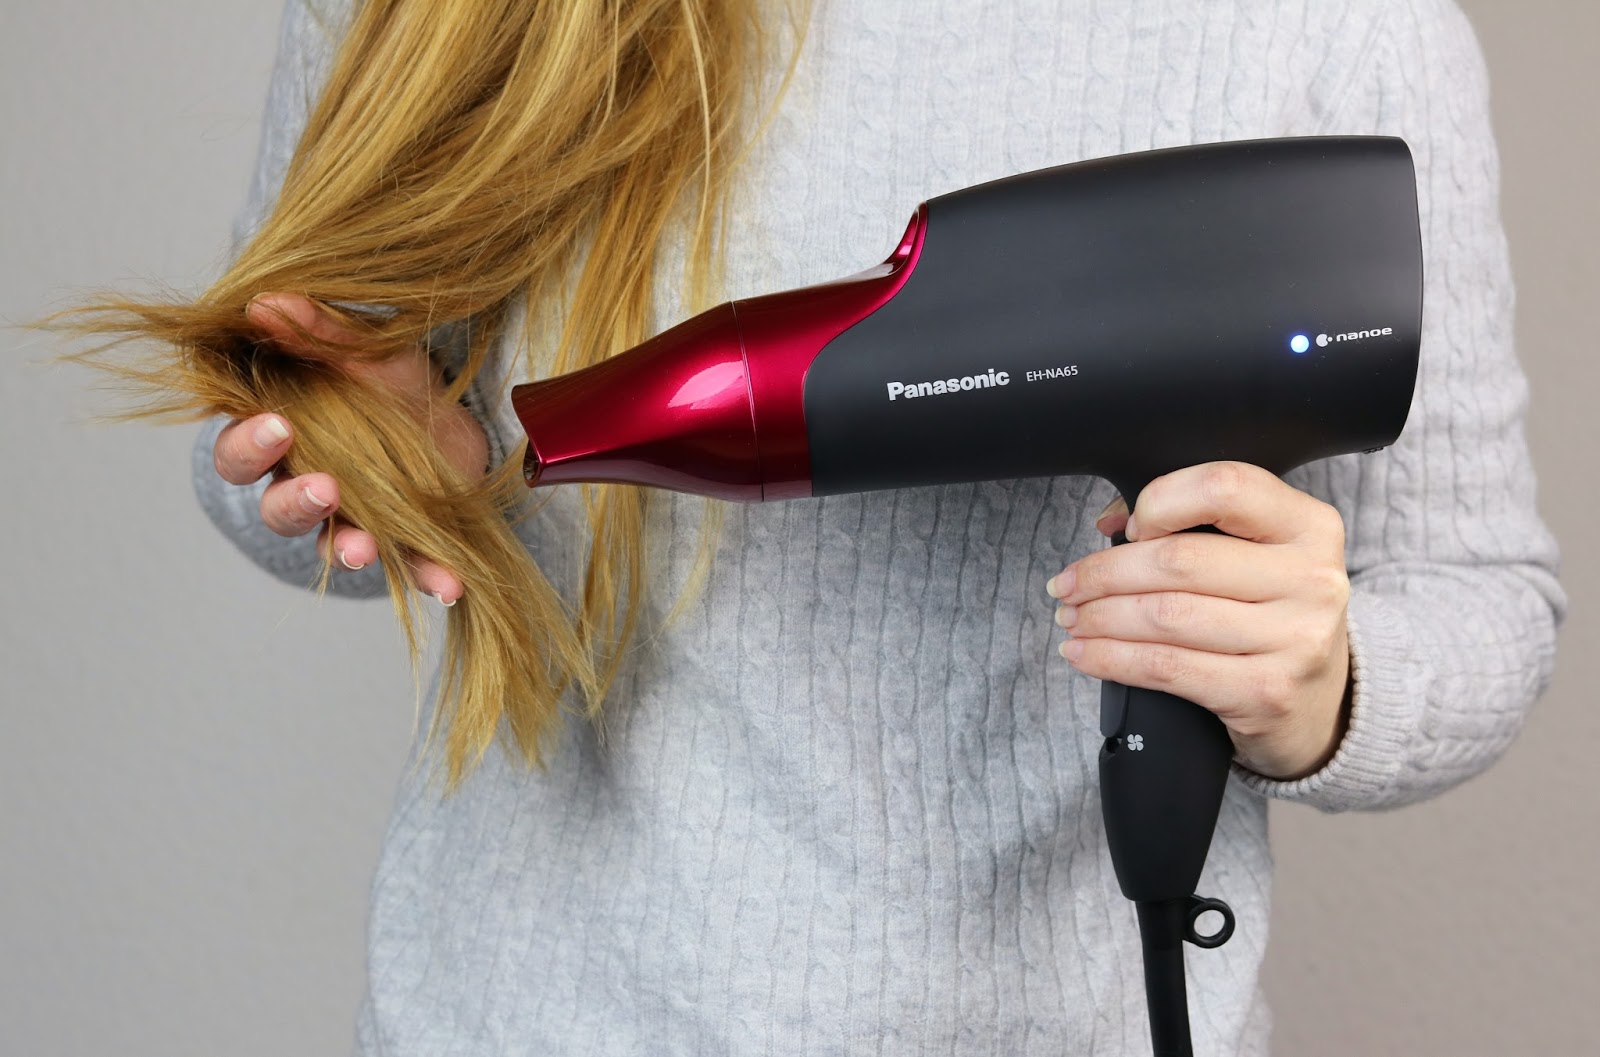 Panasonic EH-NA65 Haartrockner, konsumgöttinnen, Hair Dryer, spendet fechtigkeit, glänzendes Haar, glättet die Haarstruktur, Review, Erfahrung, Haircare, Haarpflege, nanoe Technologie, Föhn, Aufsätze, 